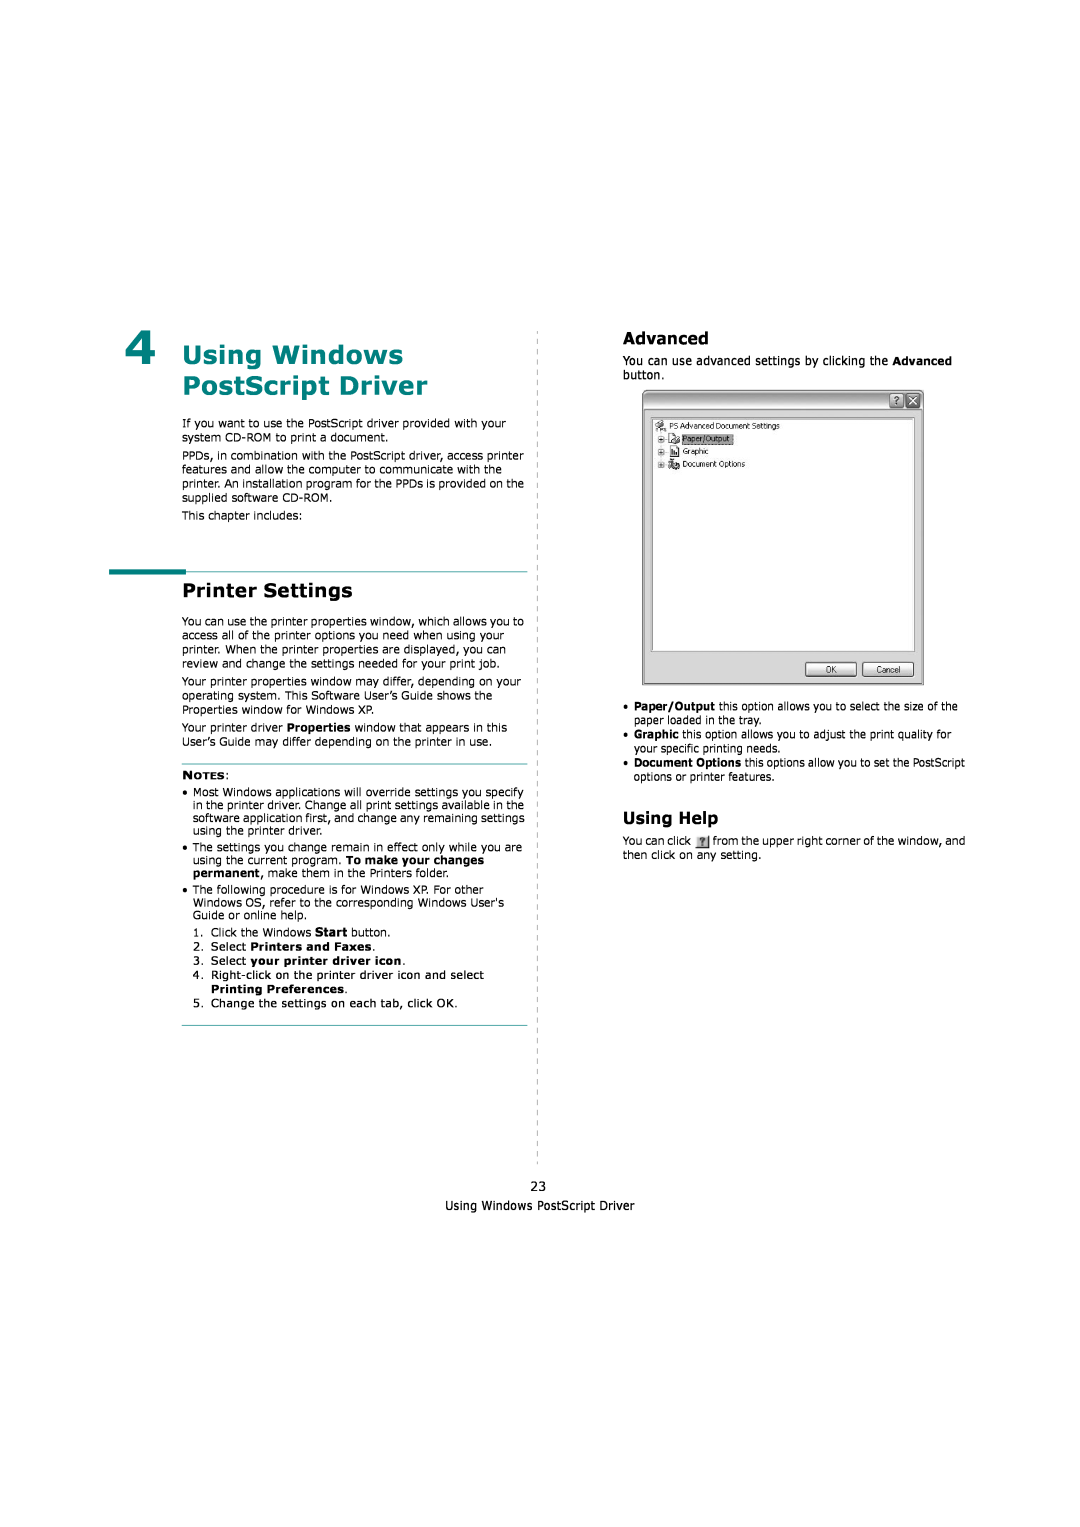 Samsung ML-4551ND, ML-4550 manual Using Windows PostScript Driver, Advanced, Printer Settings, Using Help 